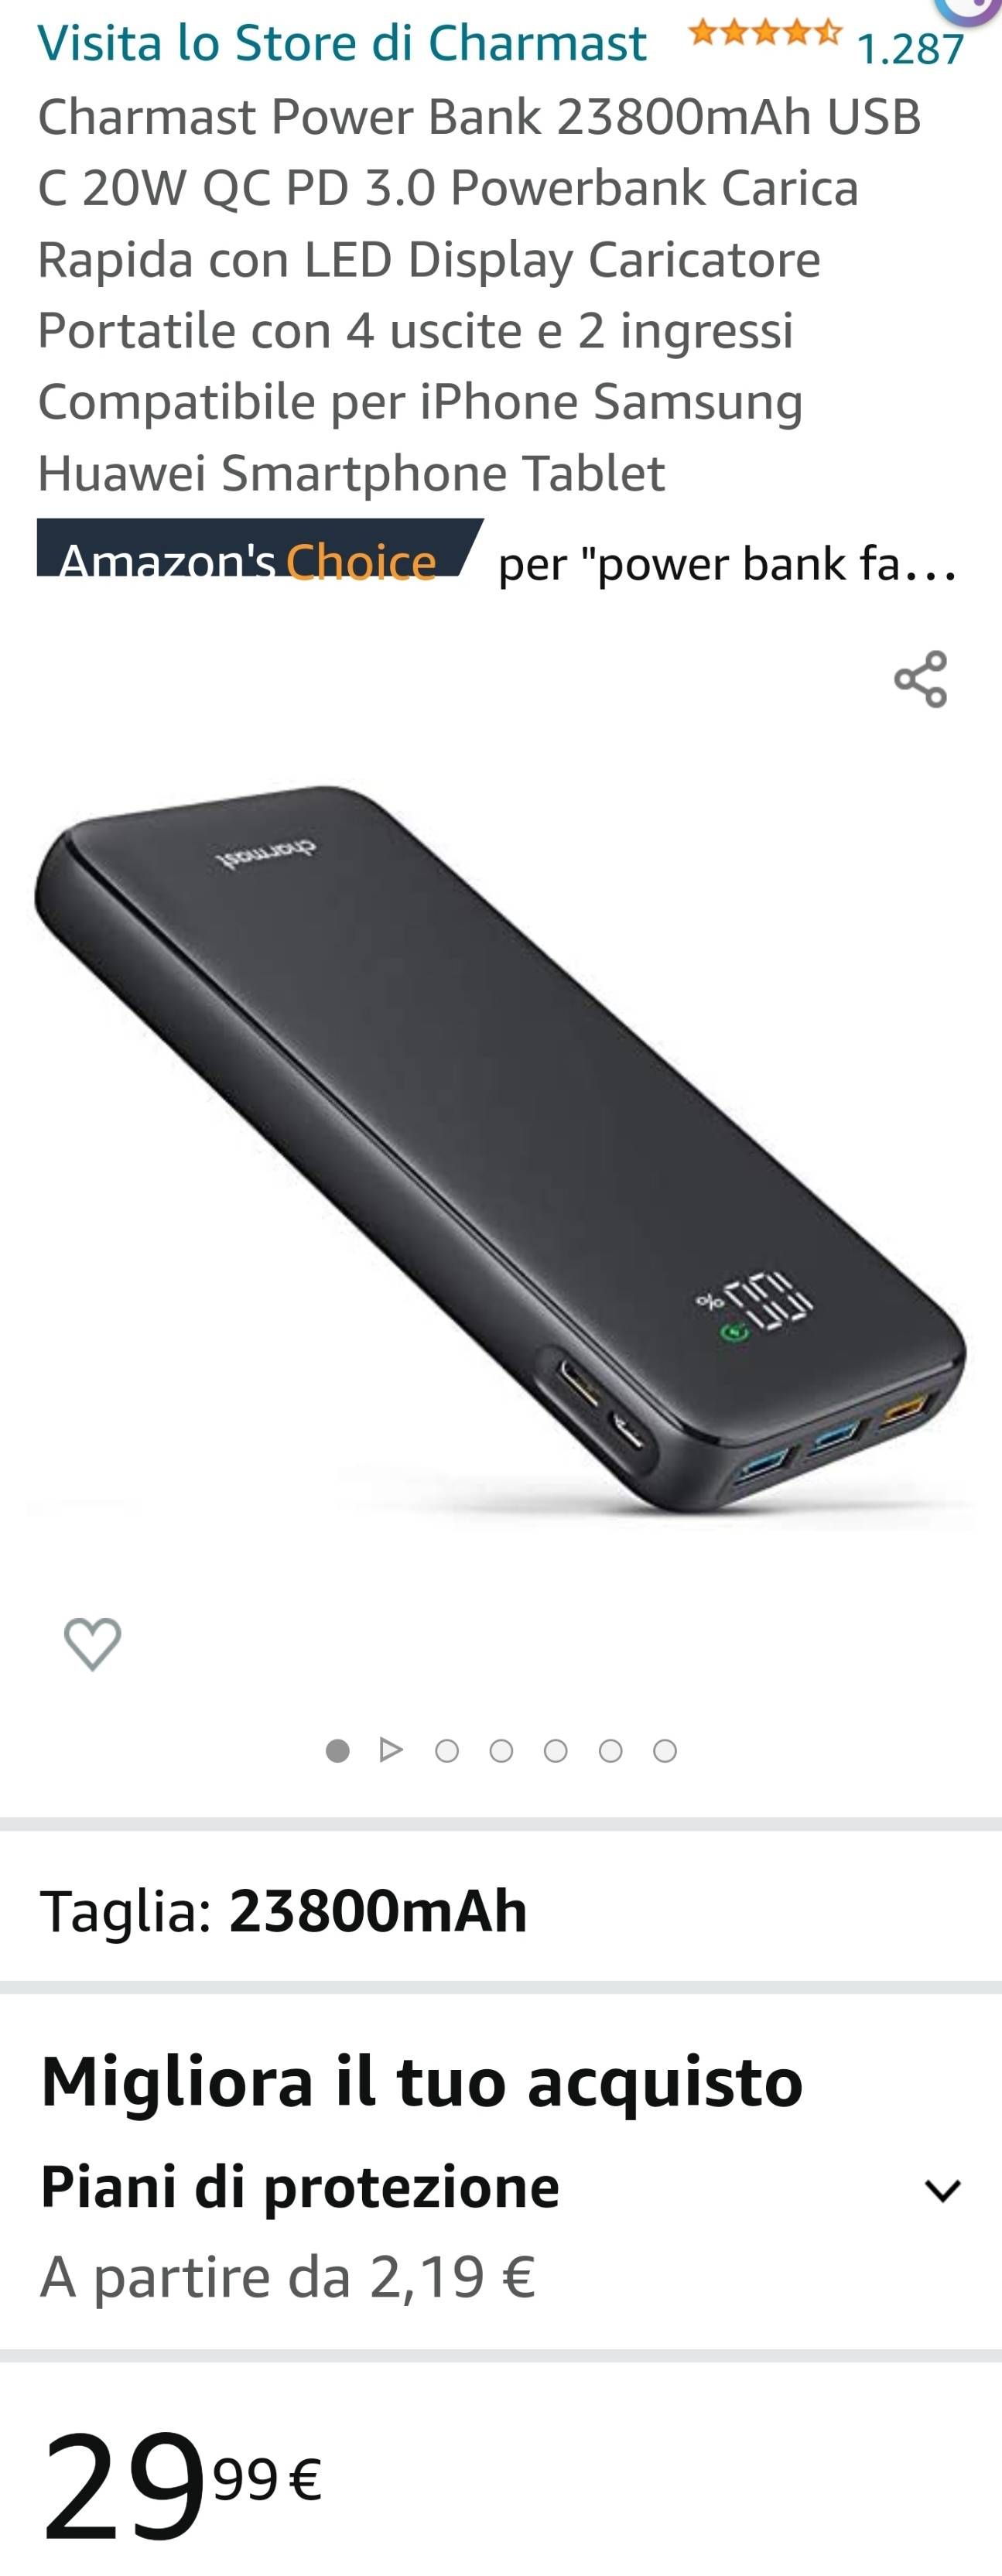 Carica batterie portatile - Samsung Community